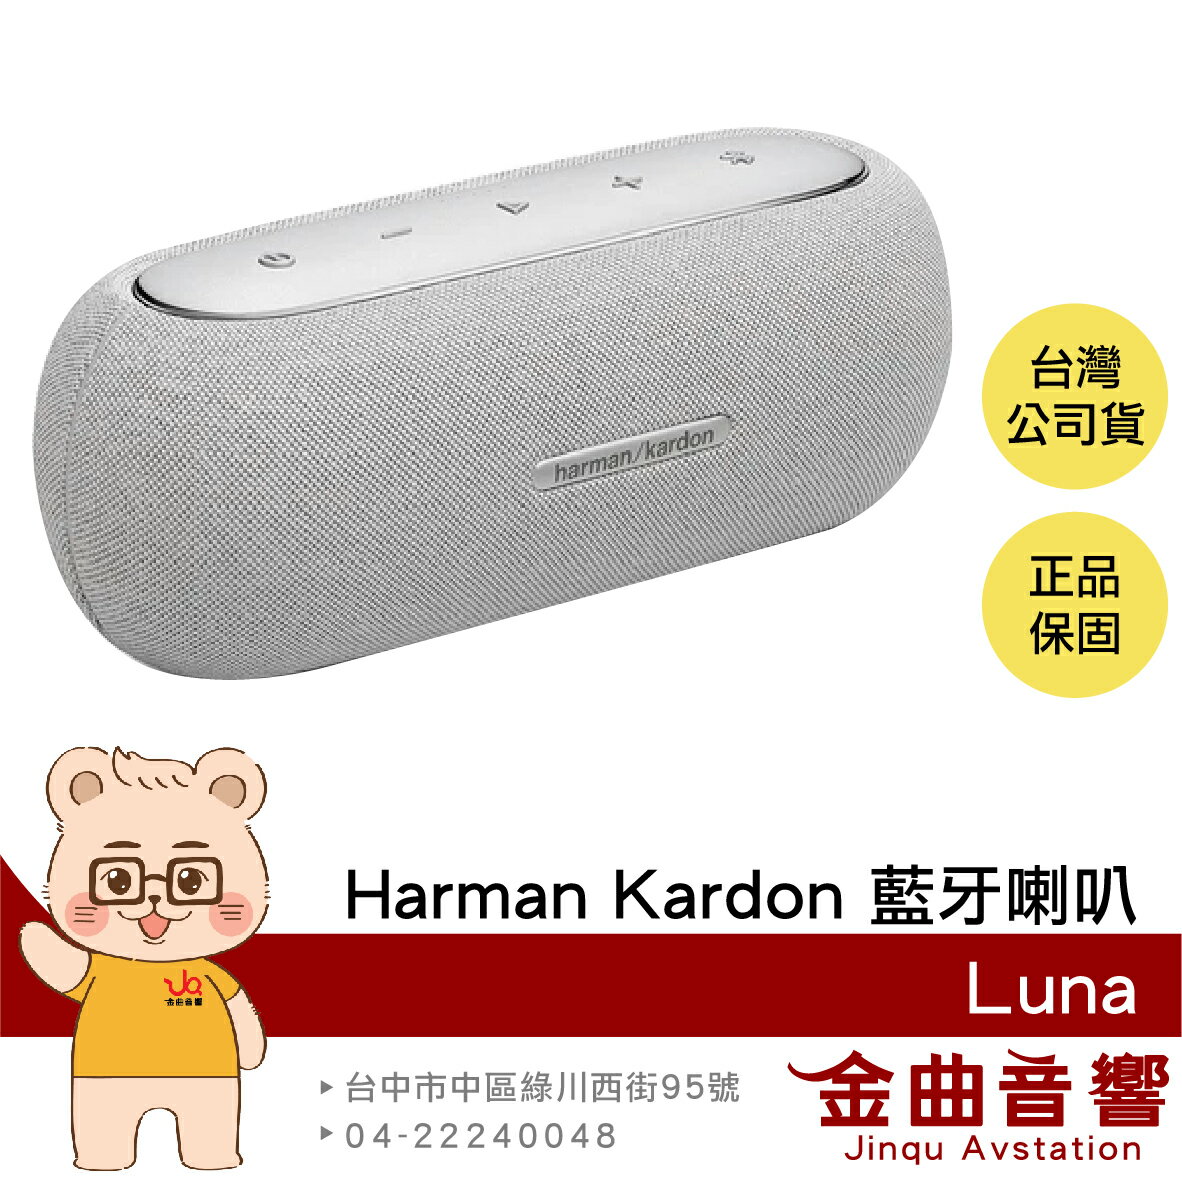 Harman Kardon Luna 灰色 IP67 防水防塵 音樂串流 藍牙5.3 隨身藍牙喇叭 | 金曲音響